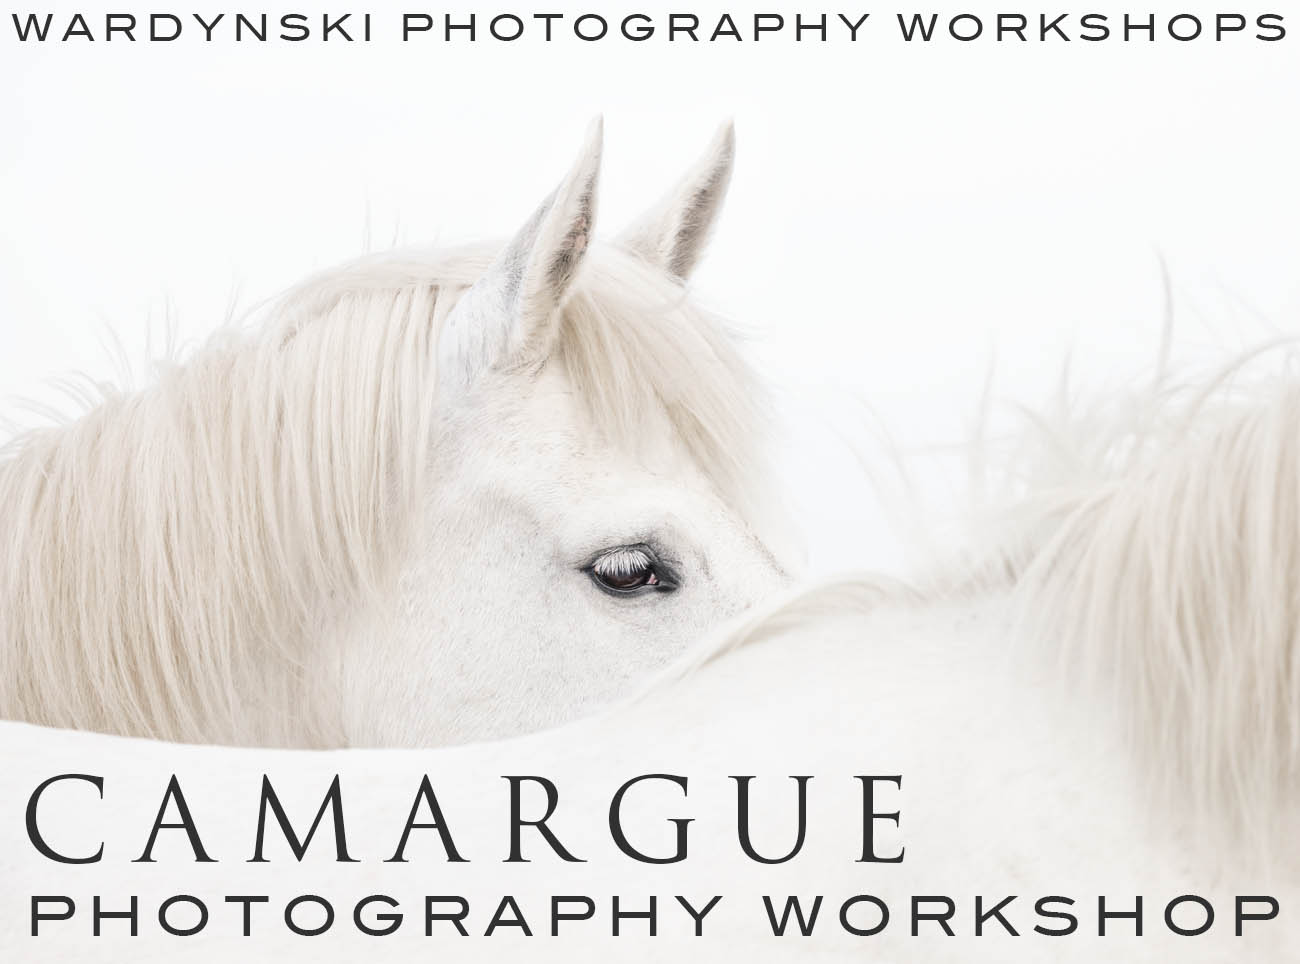 The White Horses of Camargue